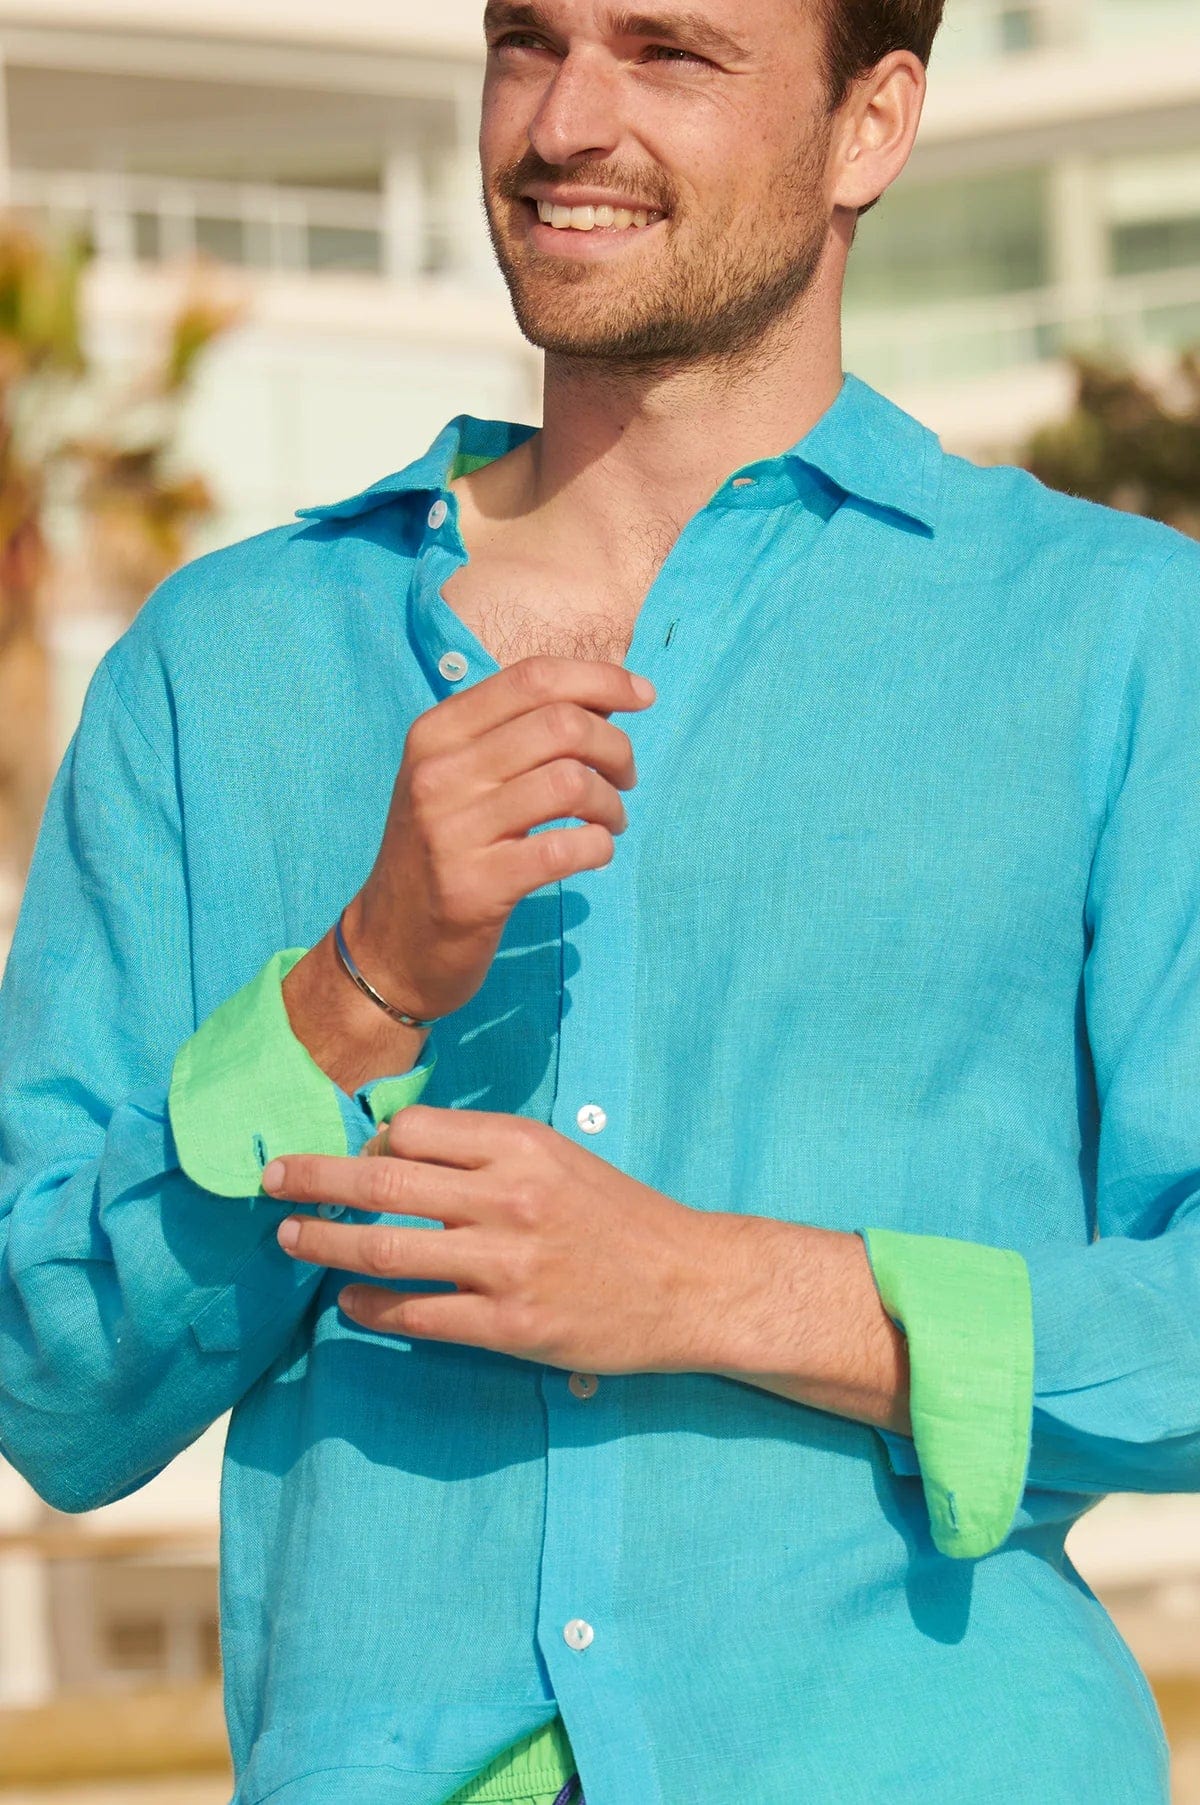 ASPIGA Mens Linen Shirt in Turquoise